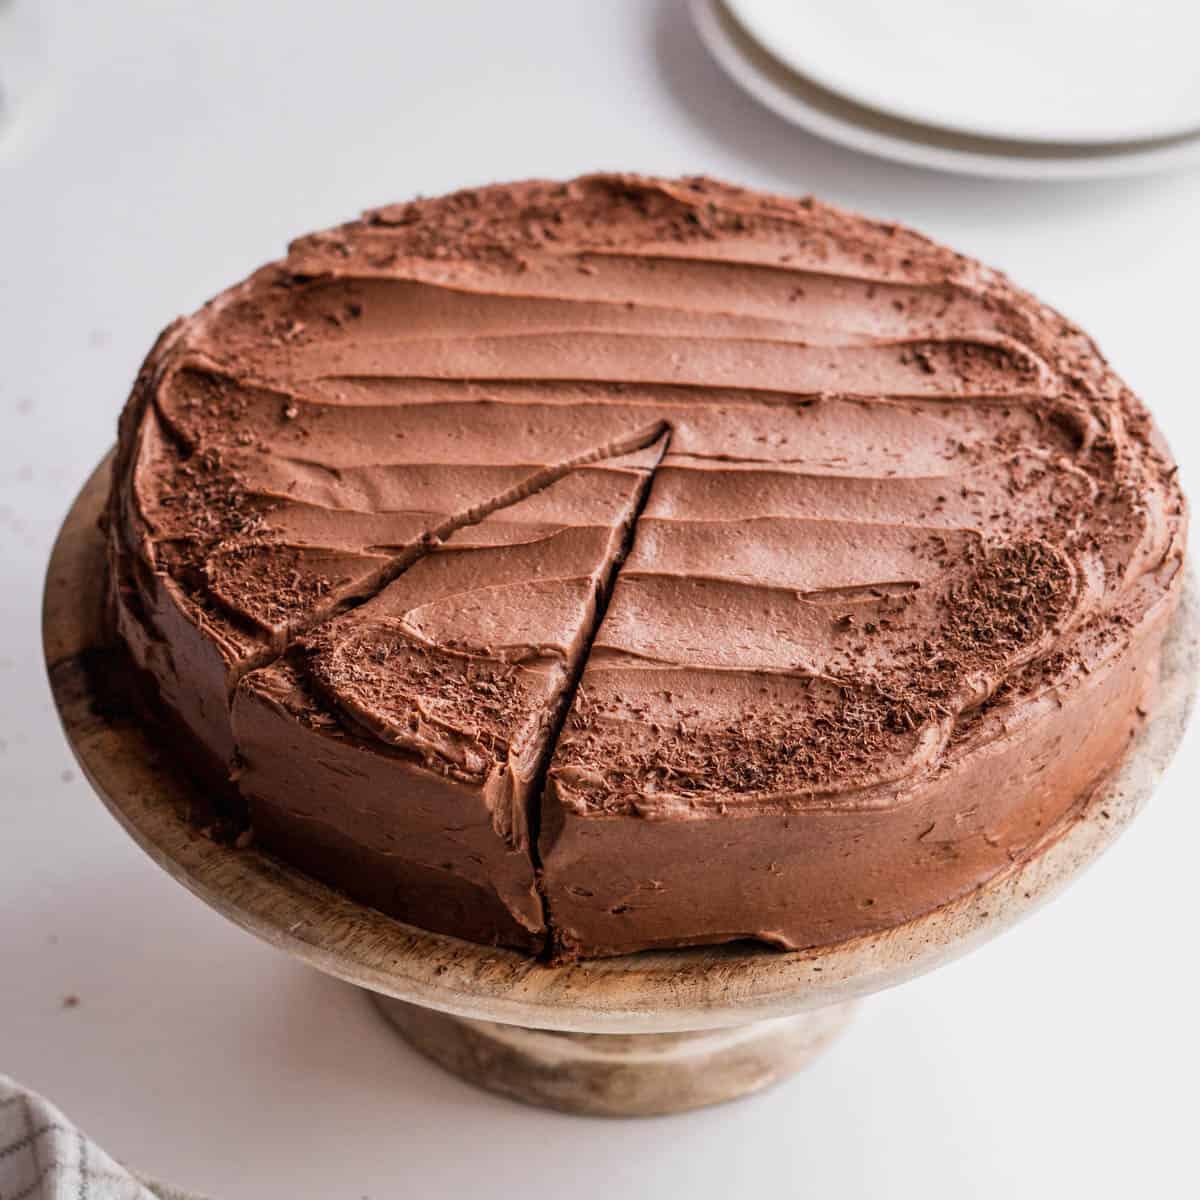 easy-chocolate-fudge-cake-featured-1.